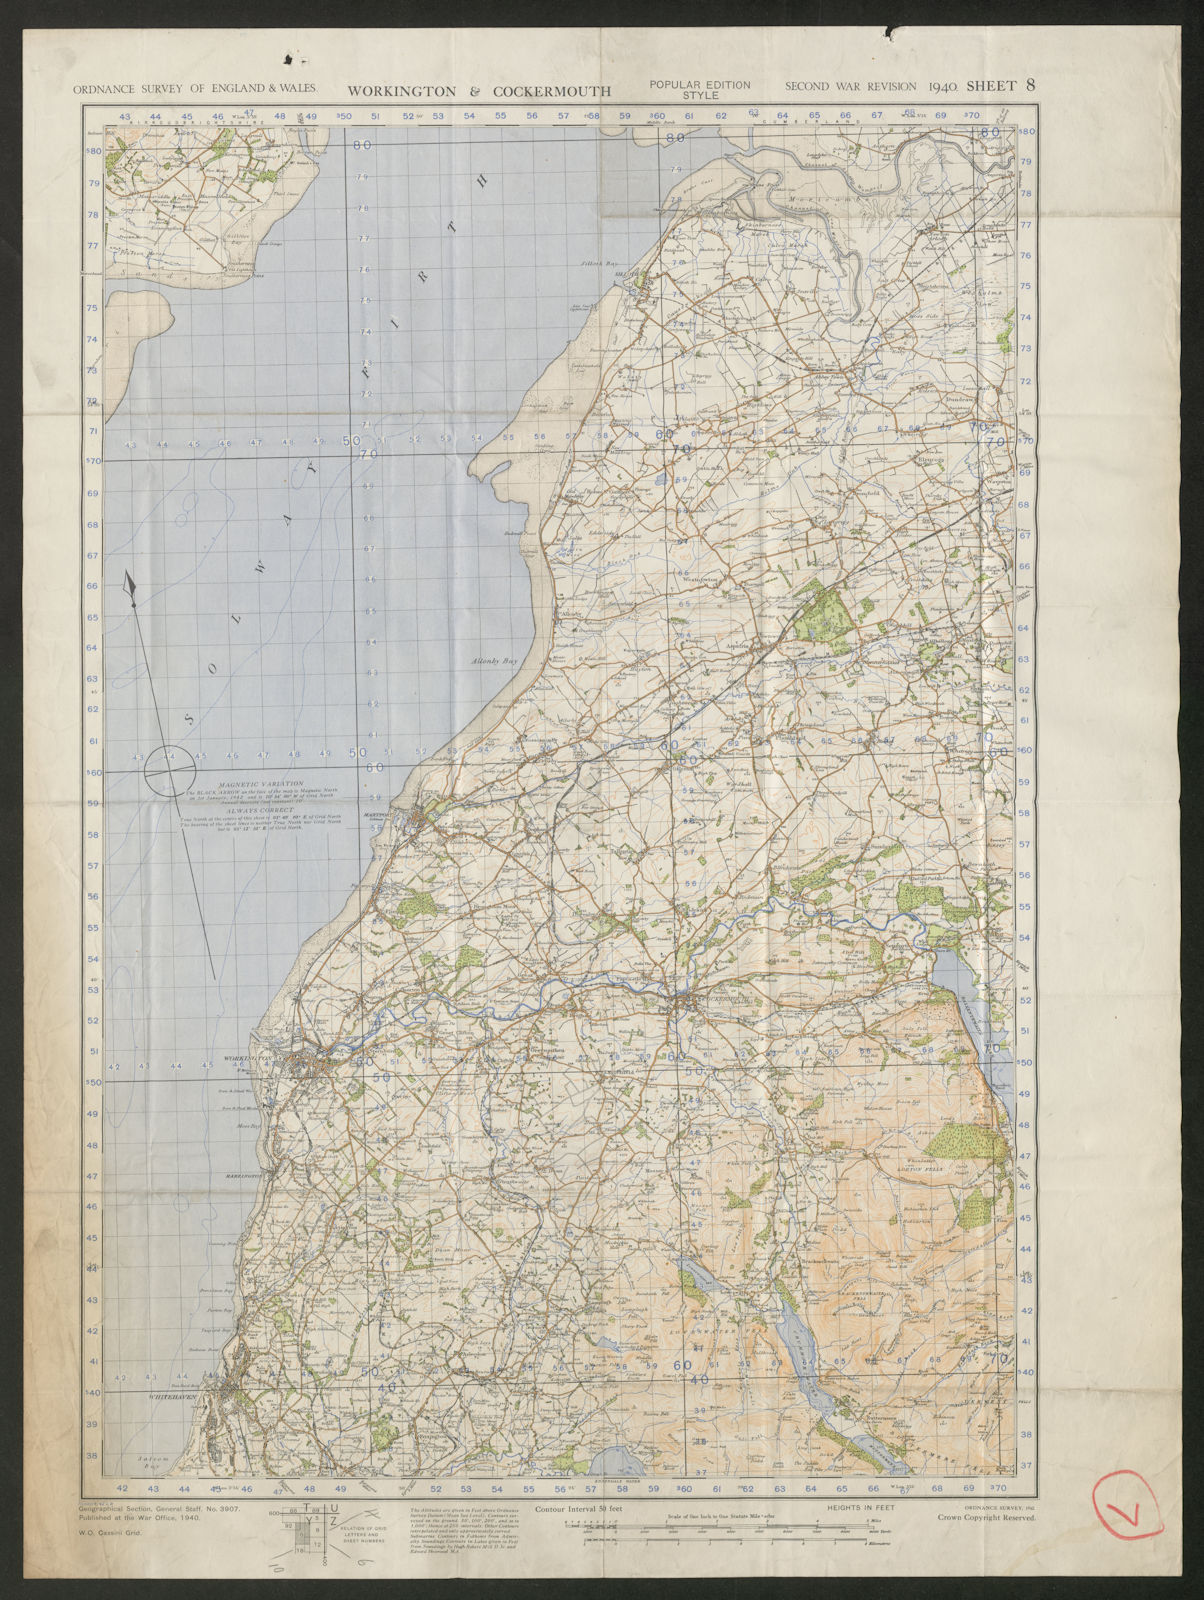 War Revision Sheet 8 WORKINGTON & COCKERMOUTH. ORDNANCE SURVEY 1940 old map